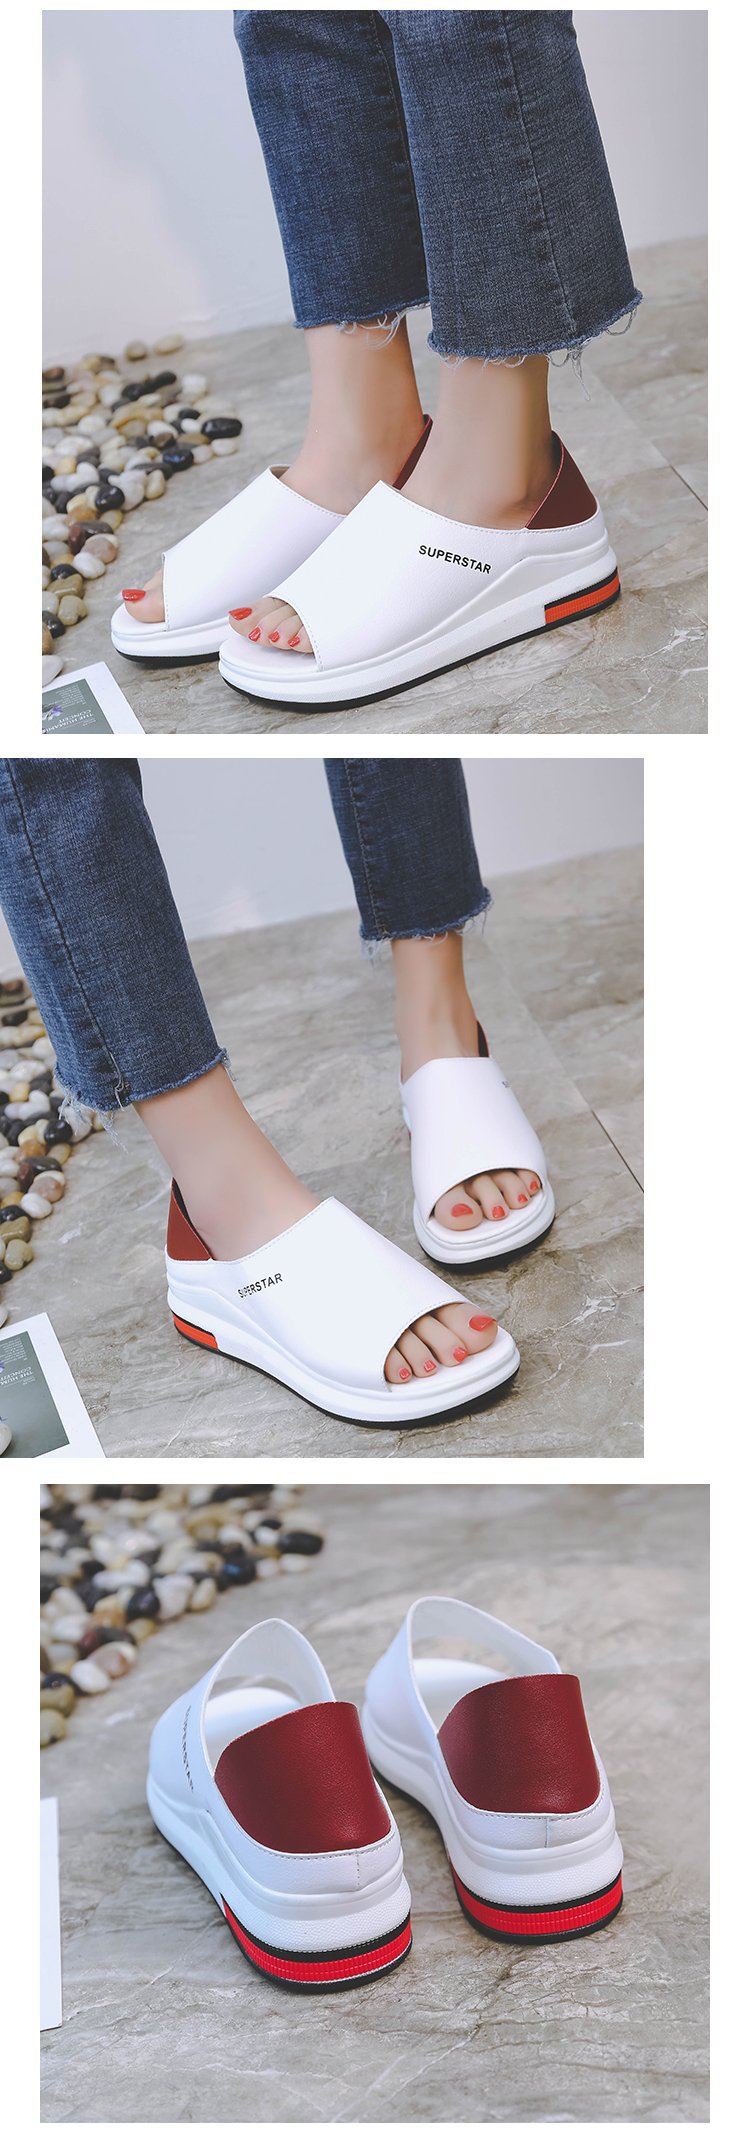 10407930507 19647336 Plus Size Summer Casual Flat Women Sandals Sport Fashion Mixed Colors Slip-On PU Leather Non-slip Platform Beach Women Shoes